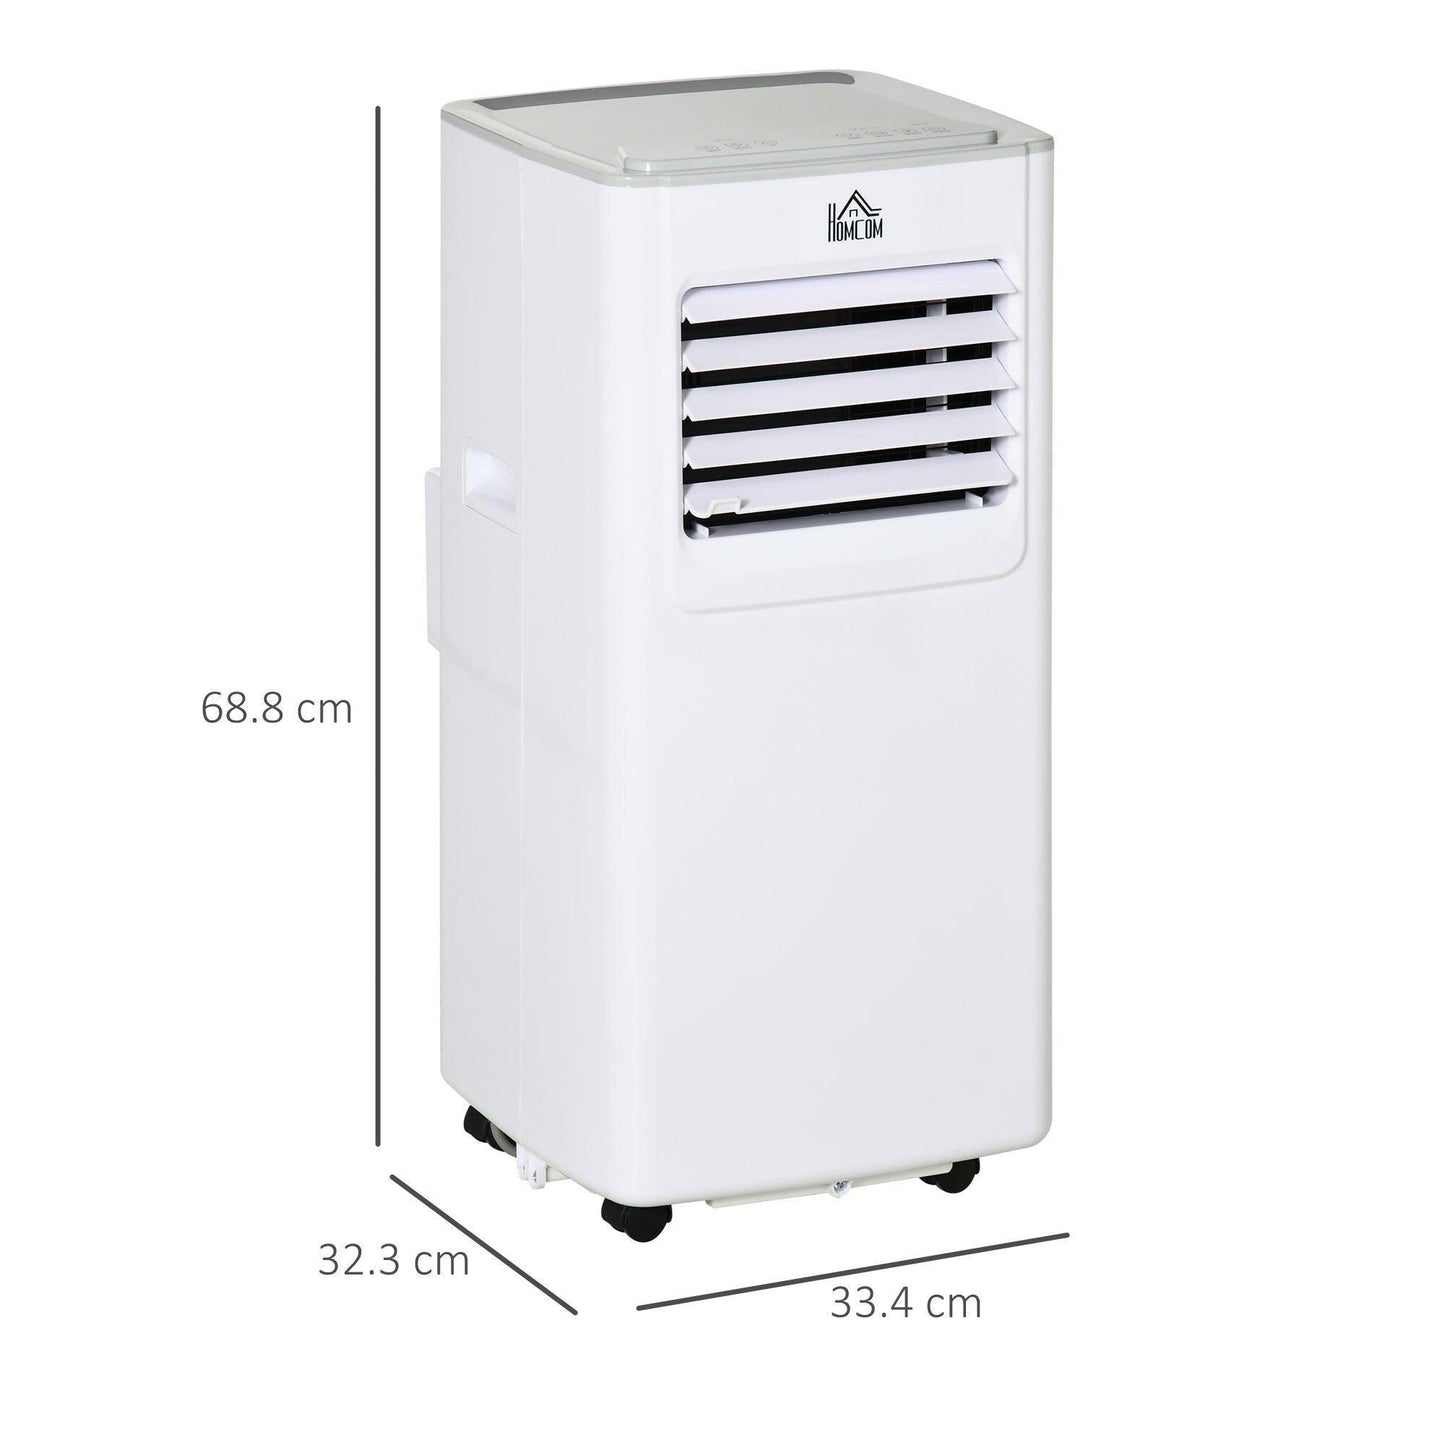 HOMCOM Portable AC - Efficient Cooling & Dehumidifying - ALL4U RETAILER LTD